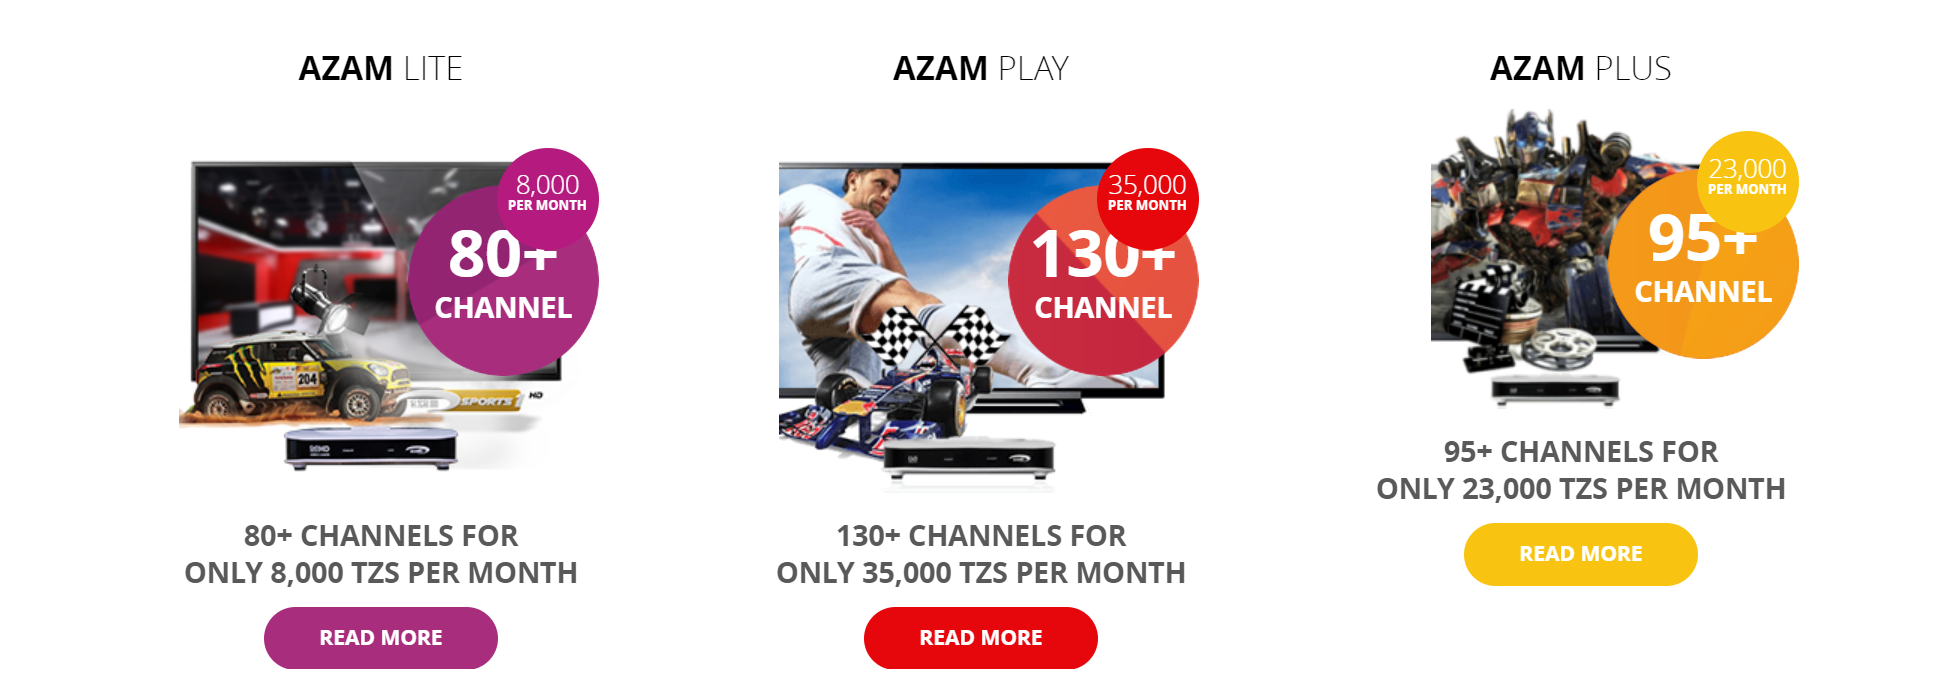 Bei Ya Vifurushi Vya Azam Tv - Azam TV Packages and  Prices In Tanzania